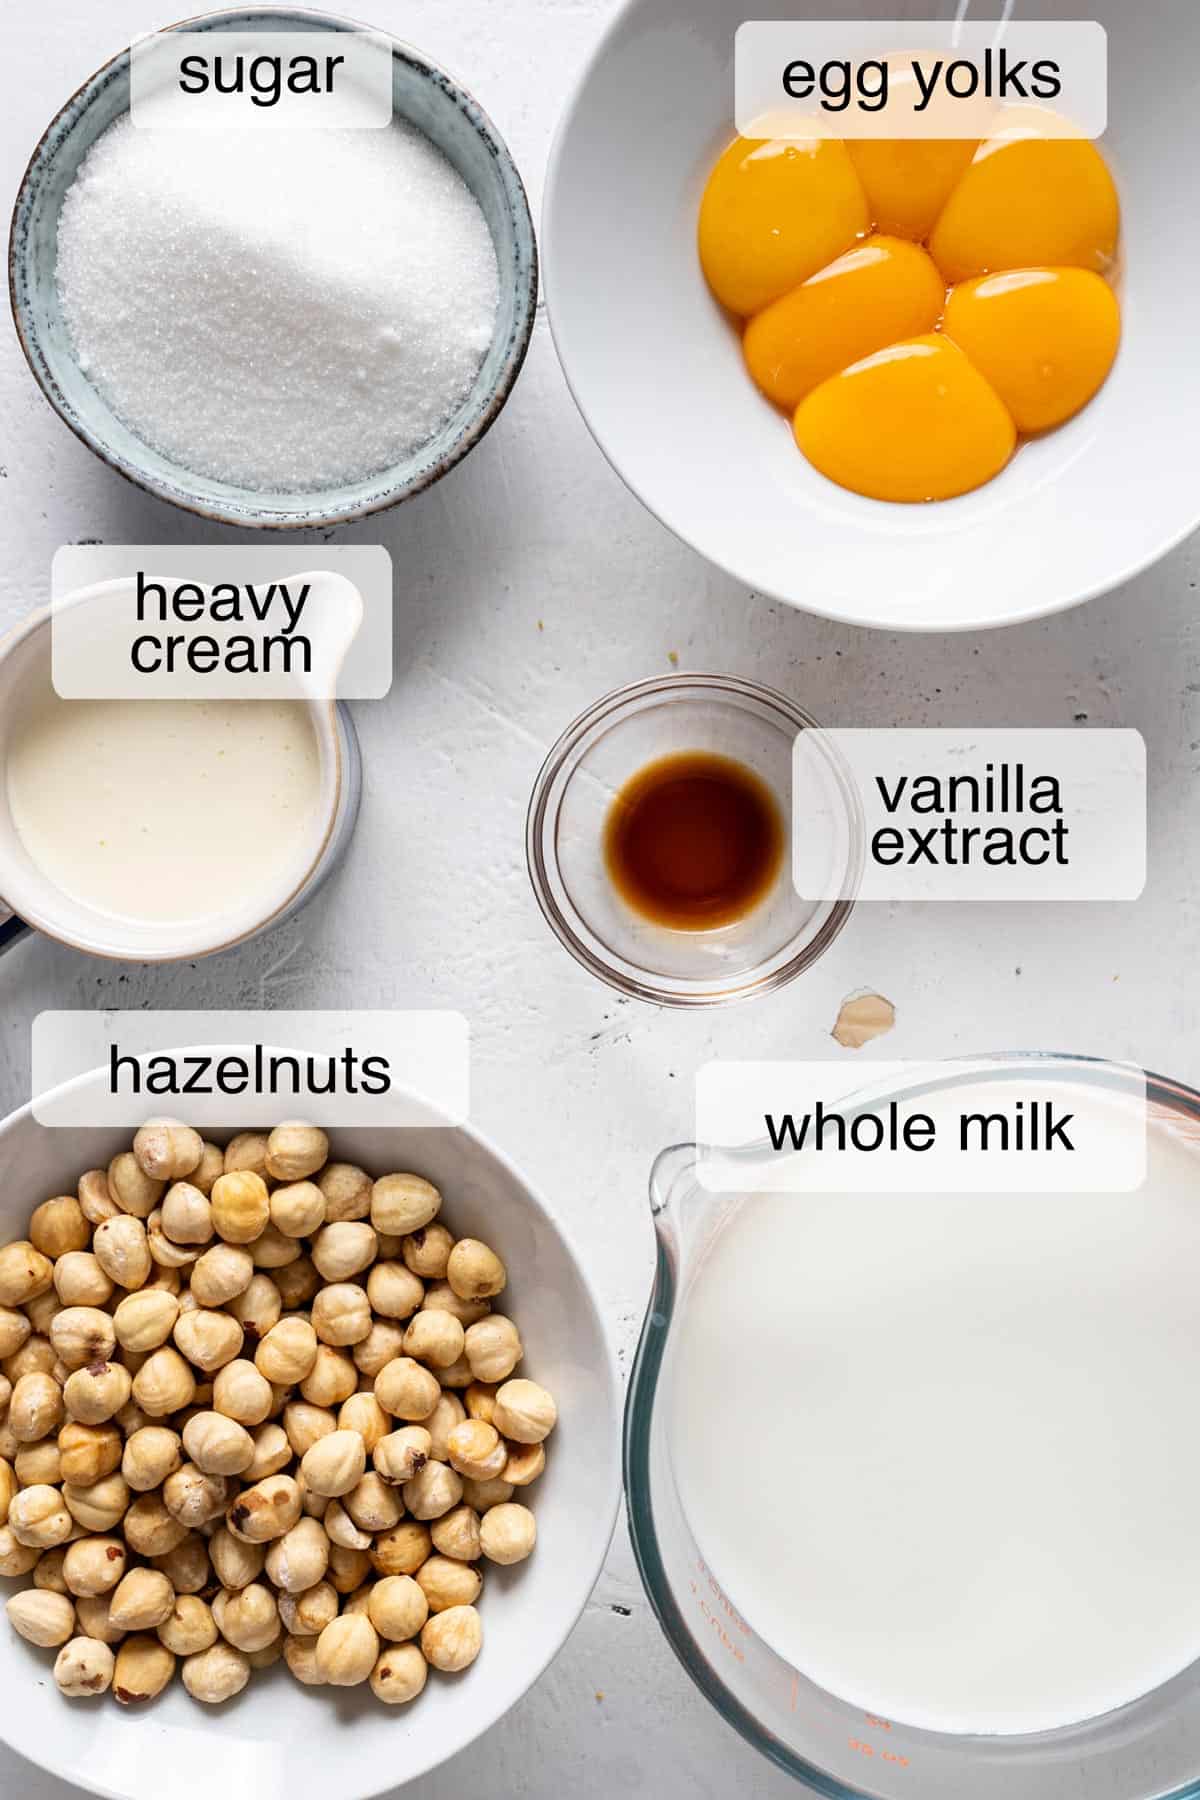 Ingredients to make hazelnut ice cream.